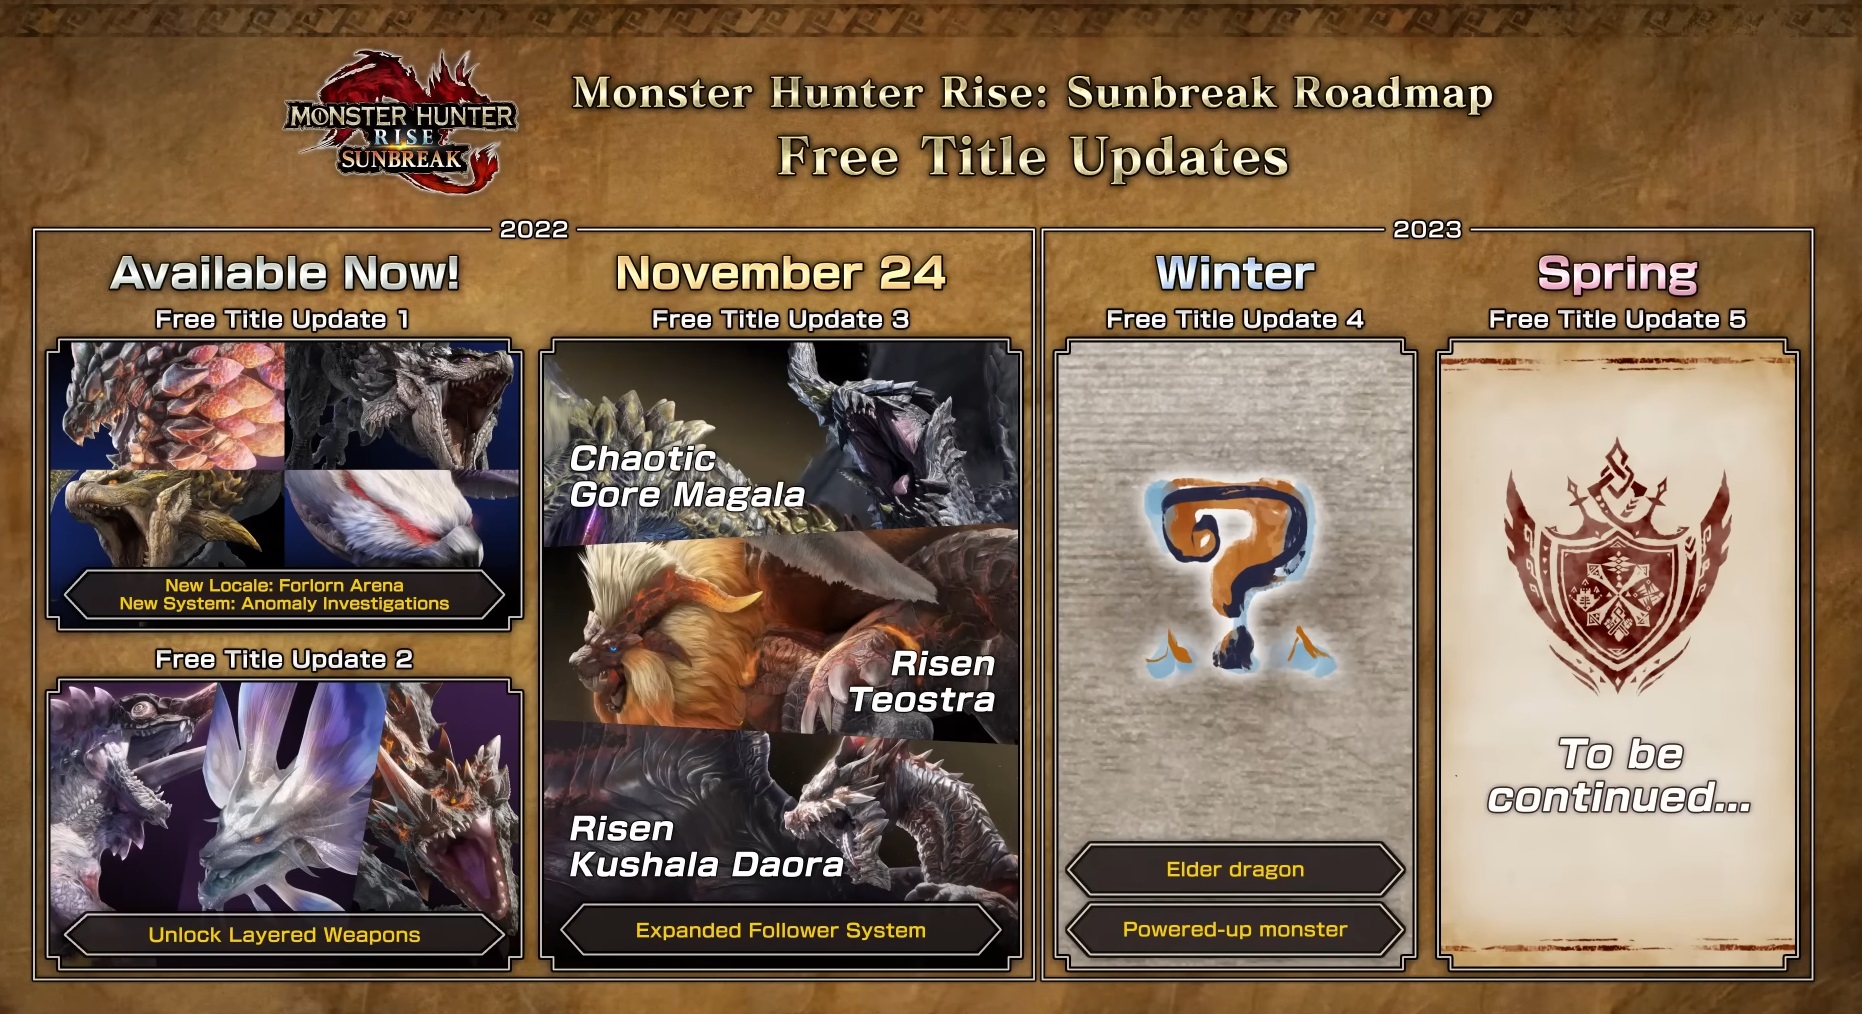 Here is the Monster Hunter Rise 2023 roadmap